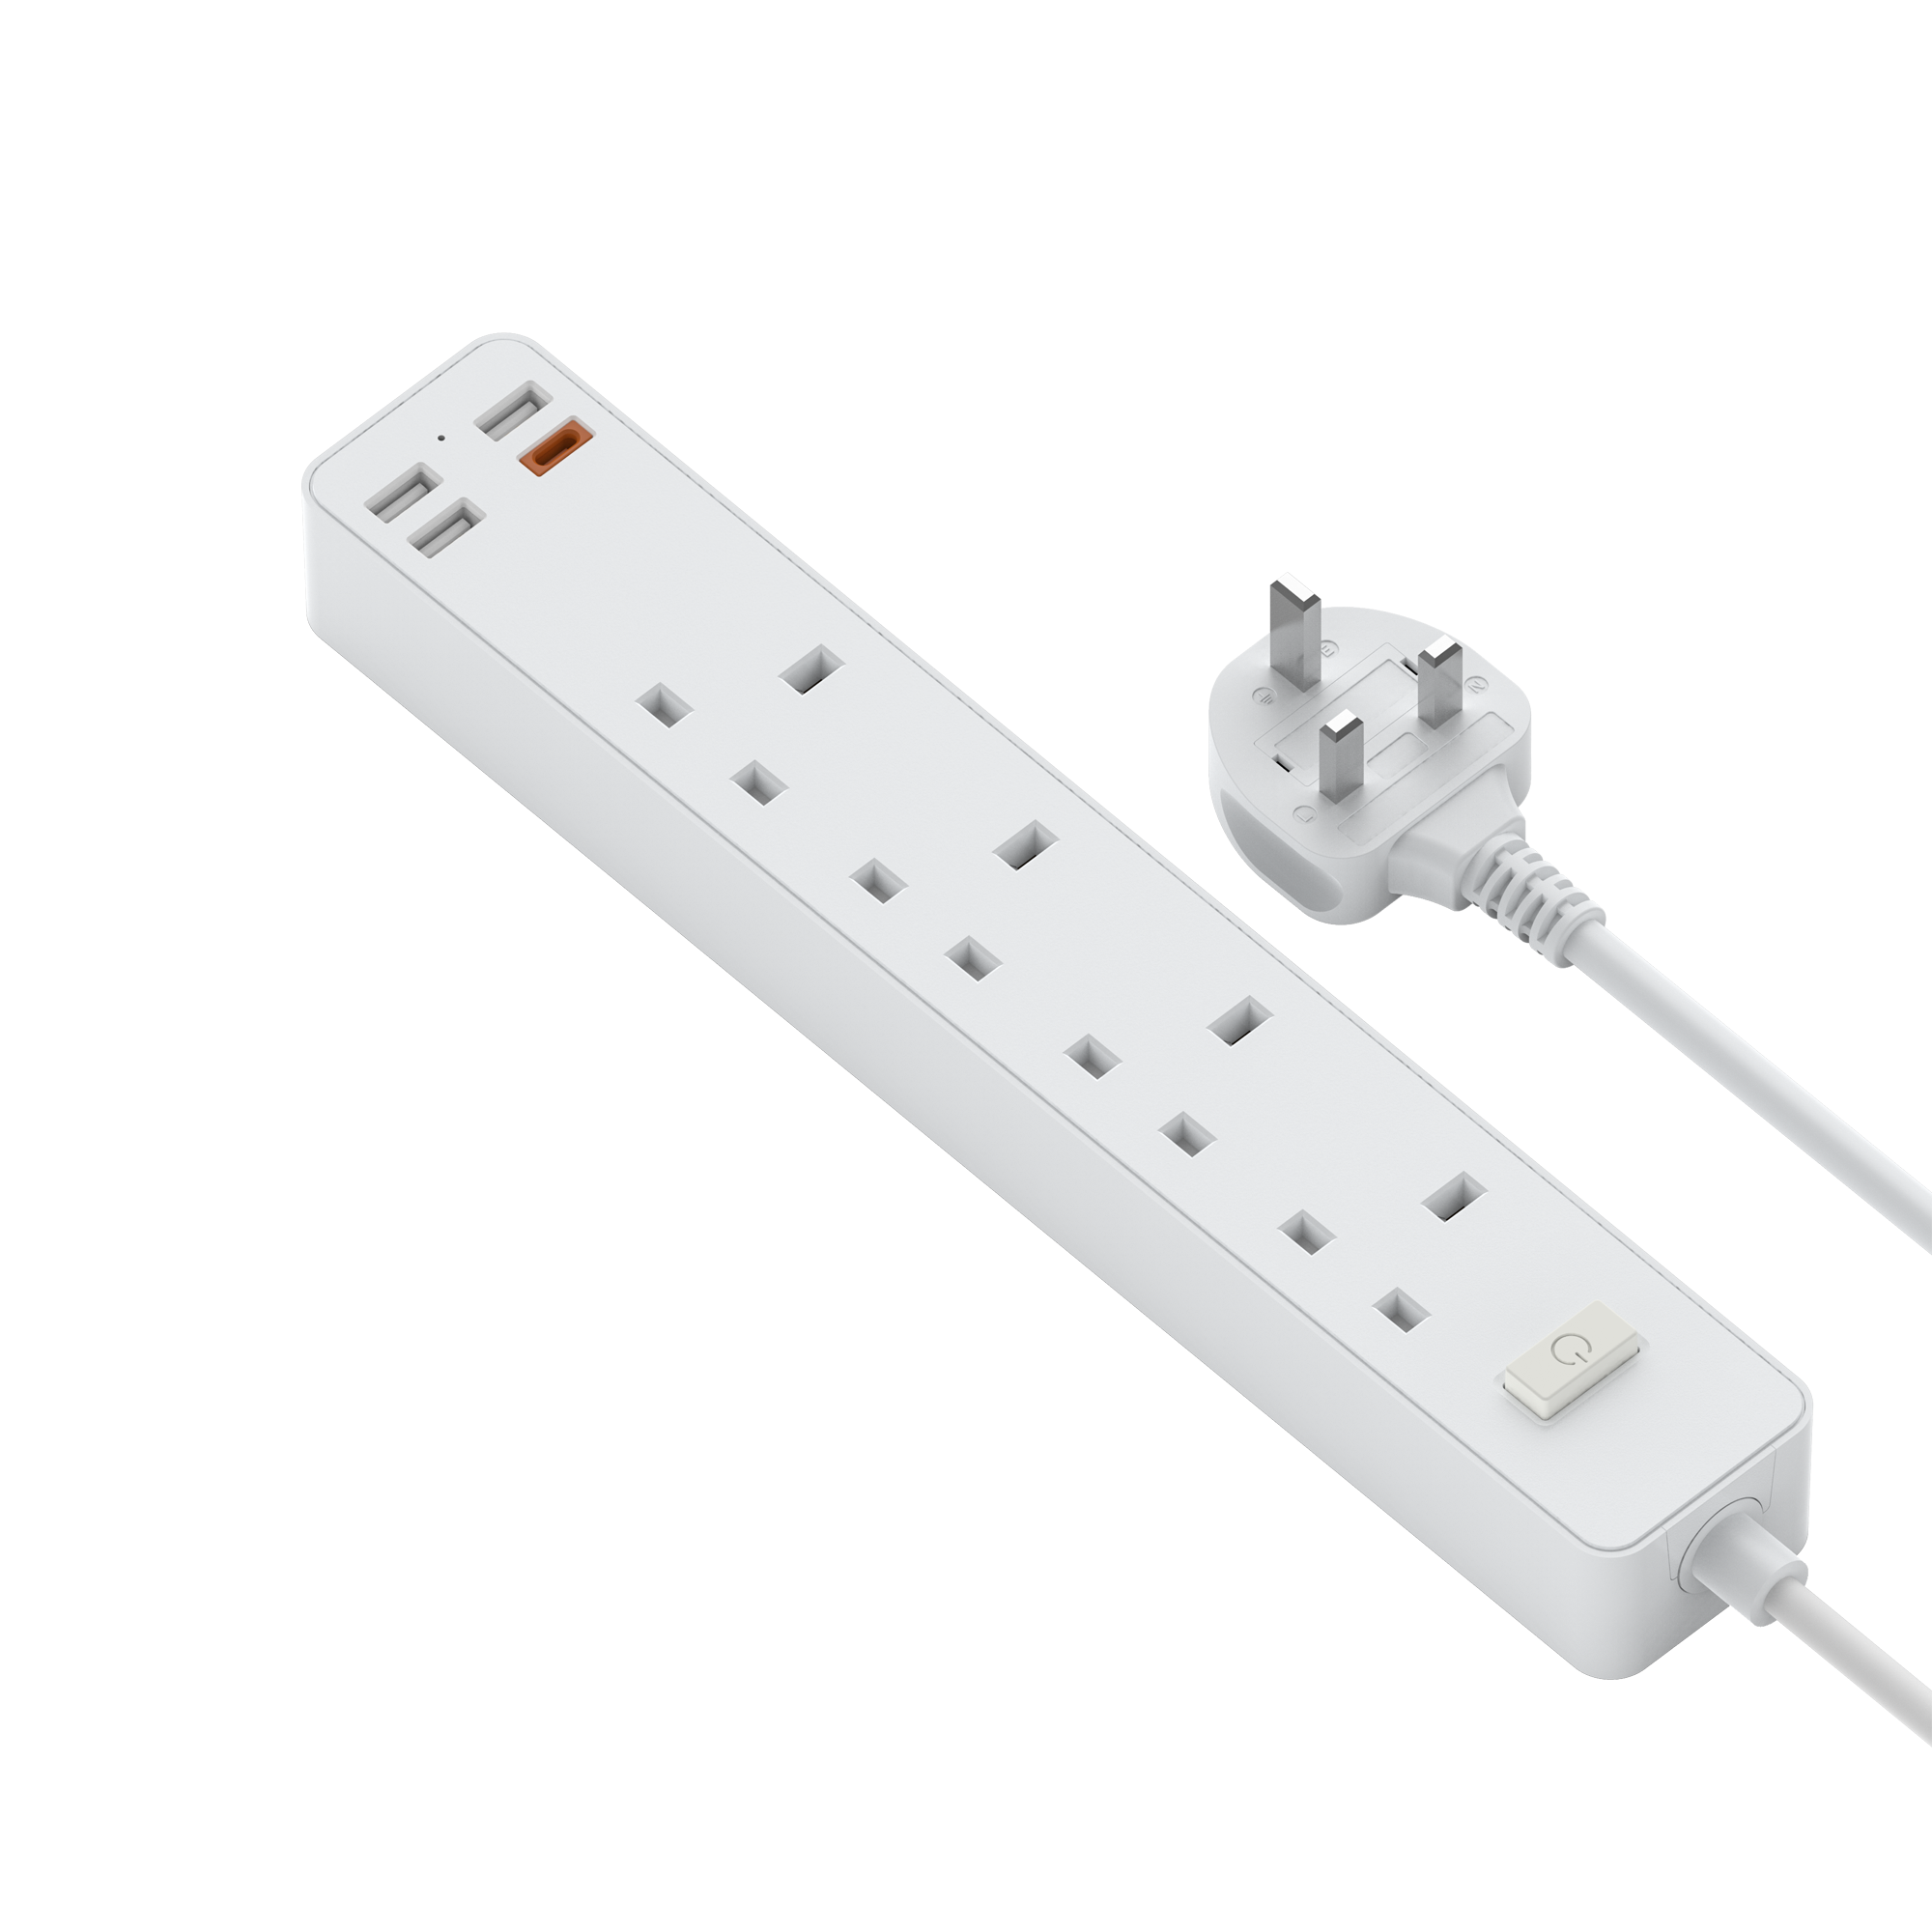 WiWU PD 20W Smart Power Strip With 3 USB & 1 USB C & 4 AC Ports UK EU Plug Power Strips for iPhone iPad Charging Home Use